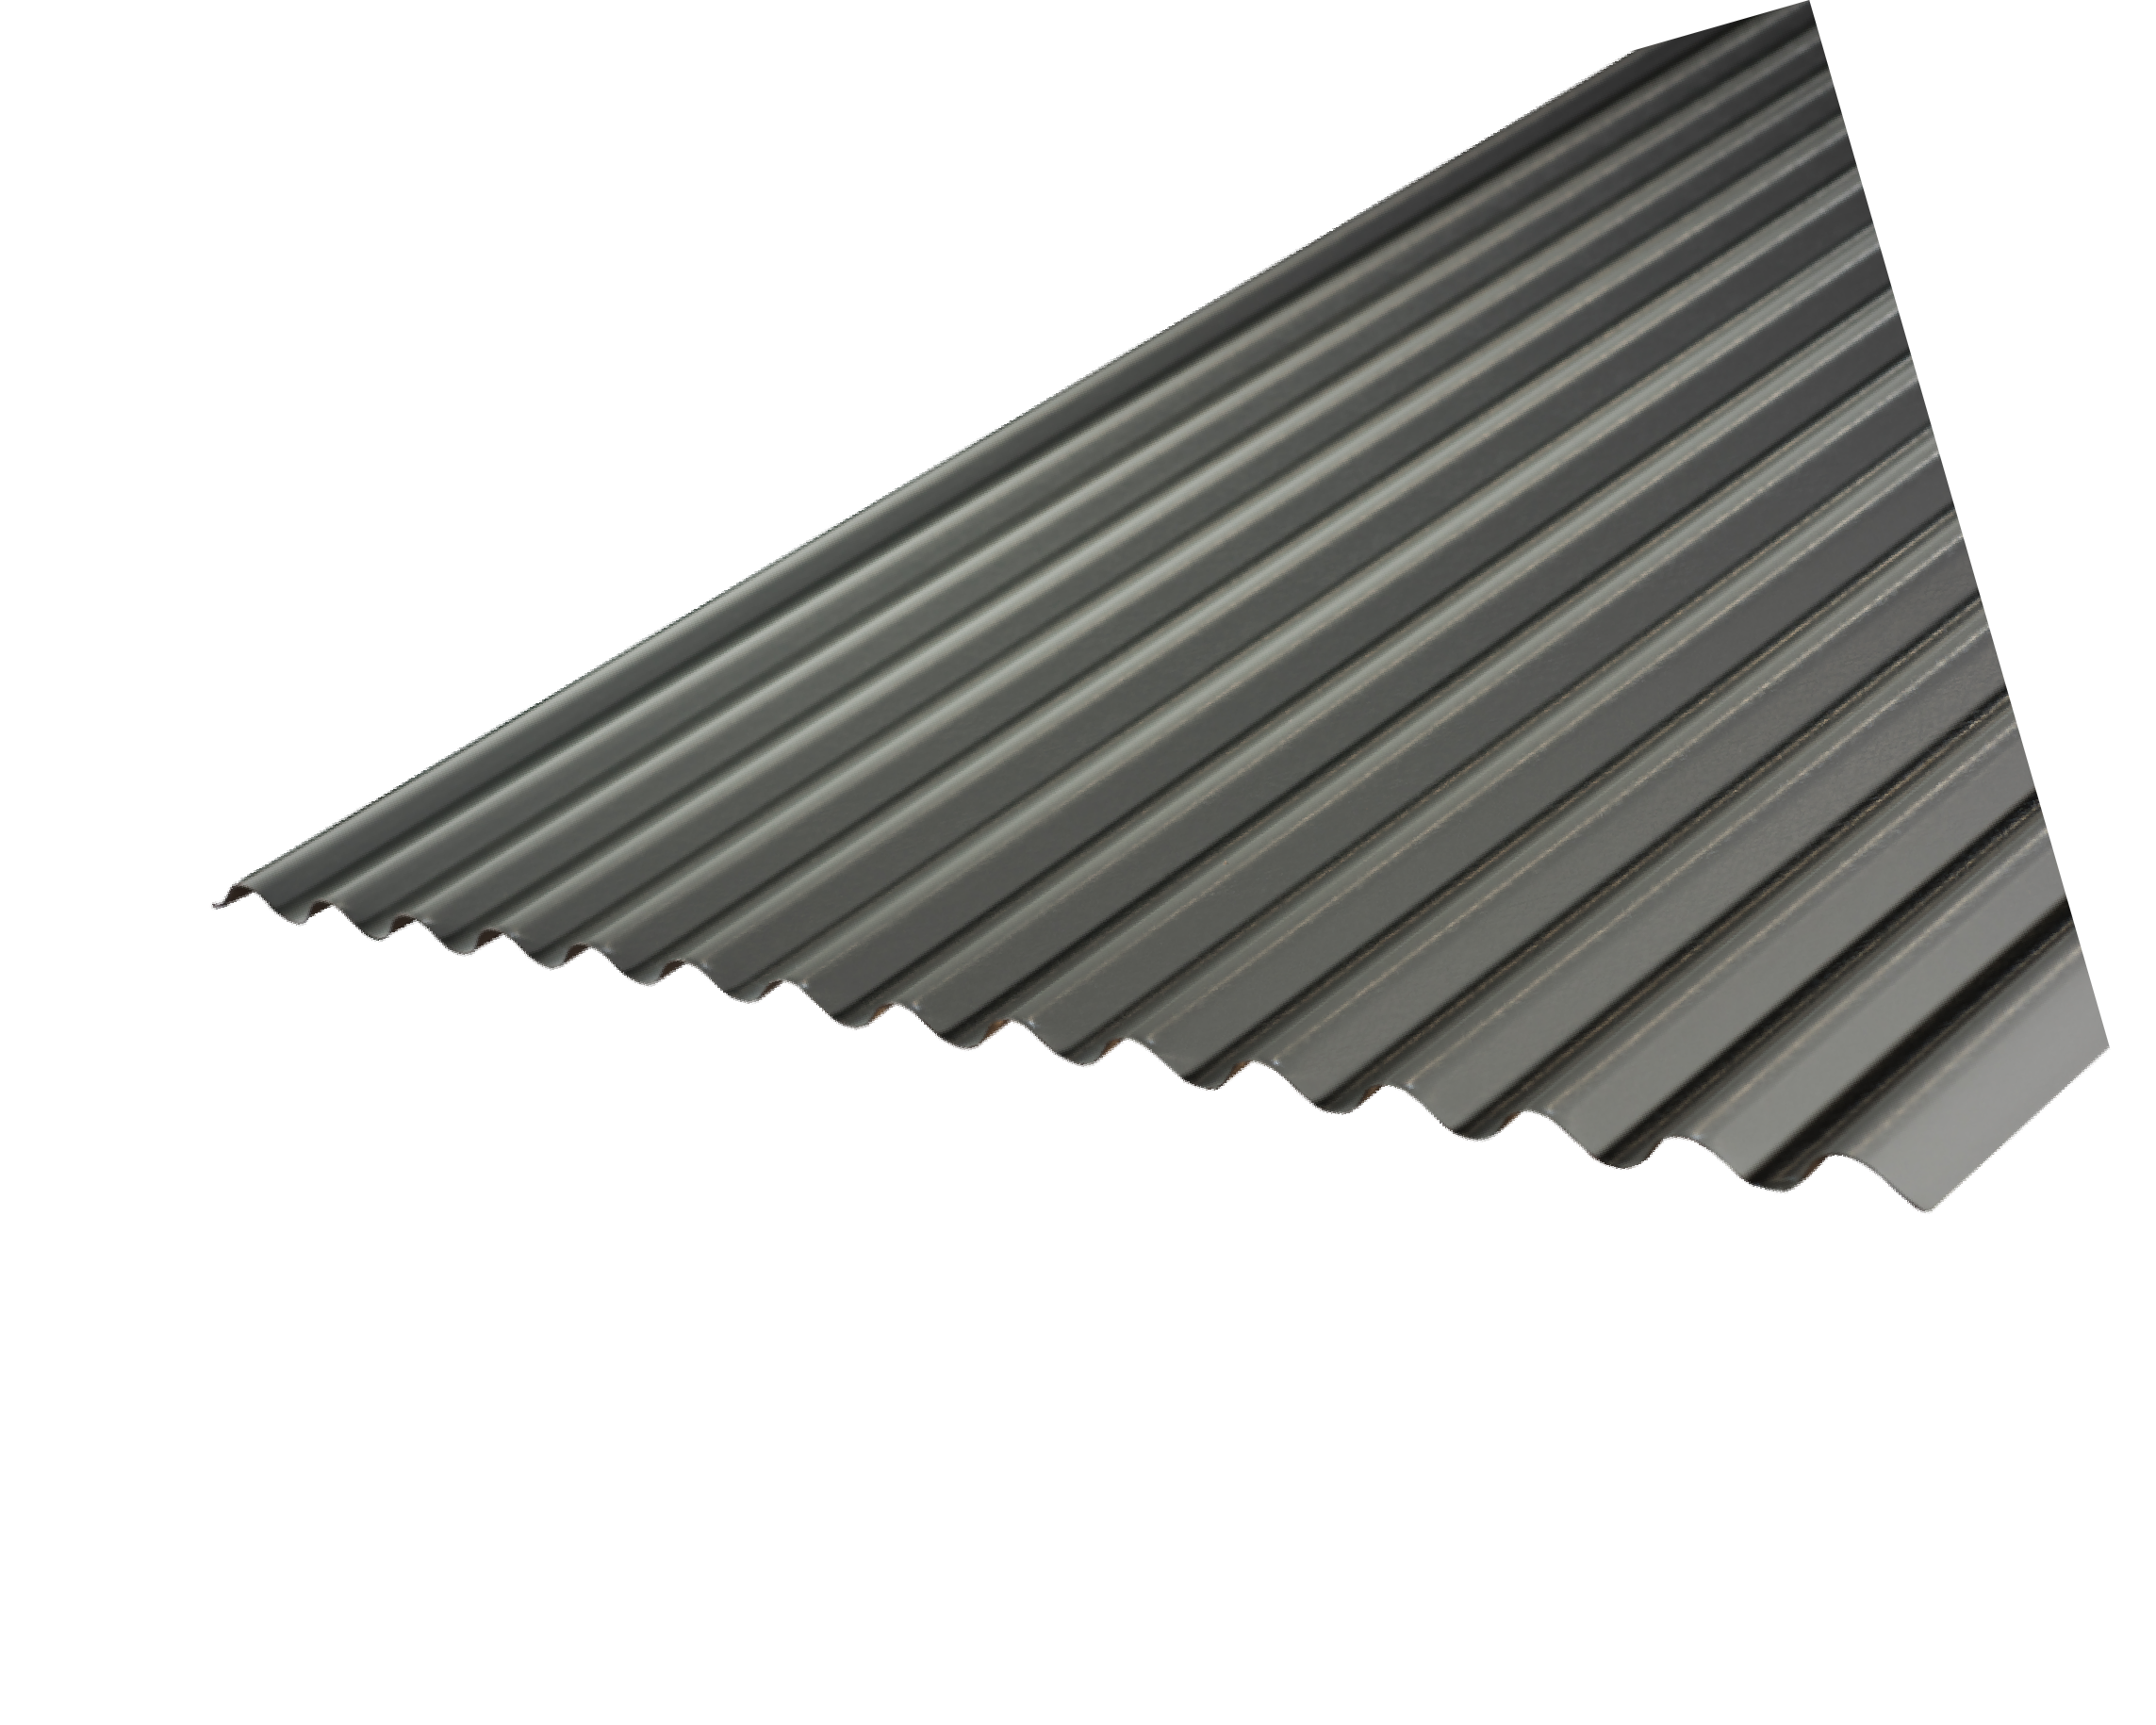 kisspng-corrugated-galvanised-iron-metal-roof-sheet-metal-metal-stripe-5ad906ad12fb28.8675483115241724610778@2x